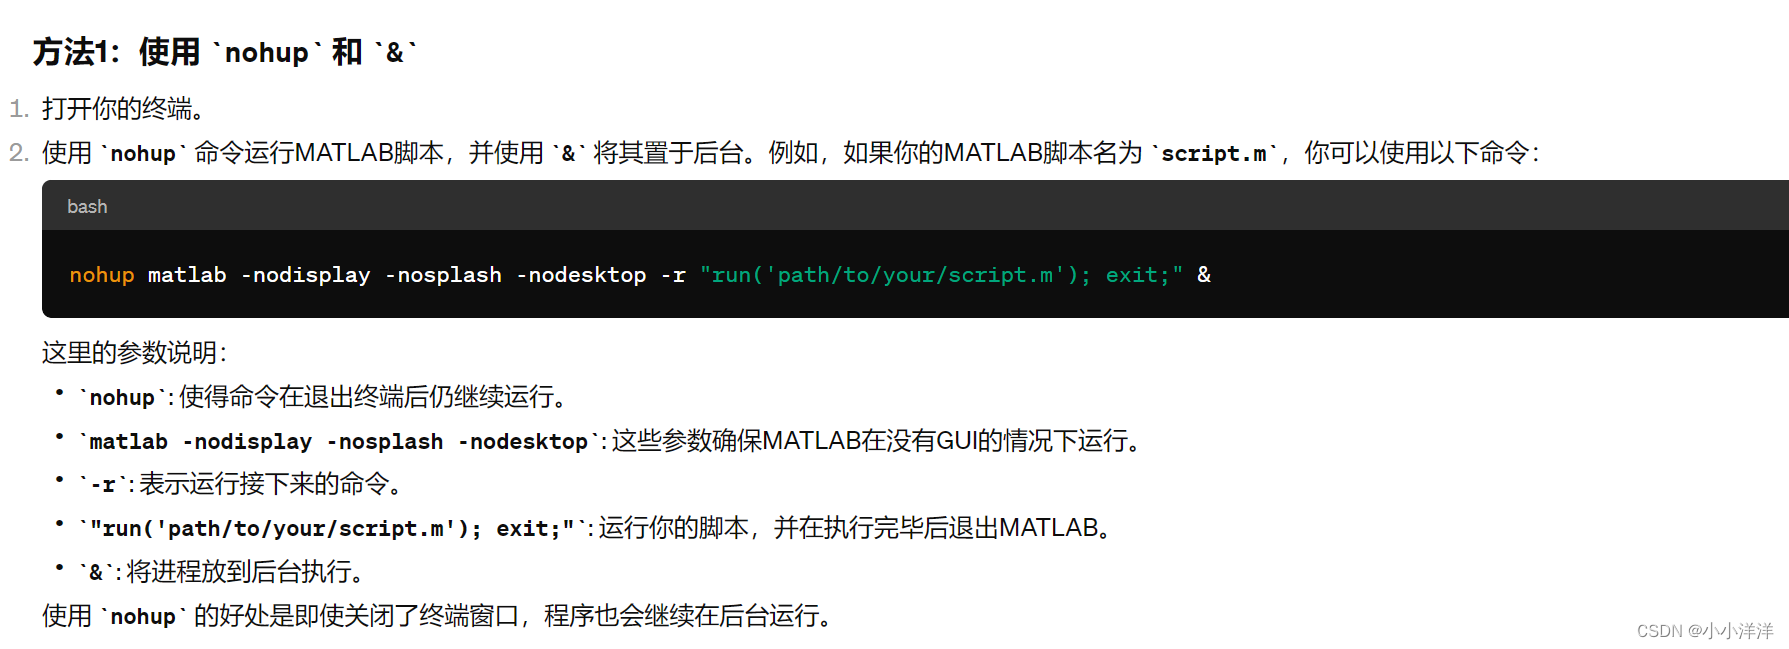 LINUX命令行后台运行matlab程序